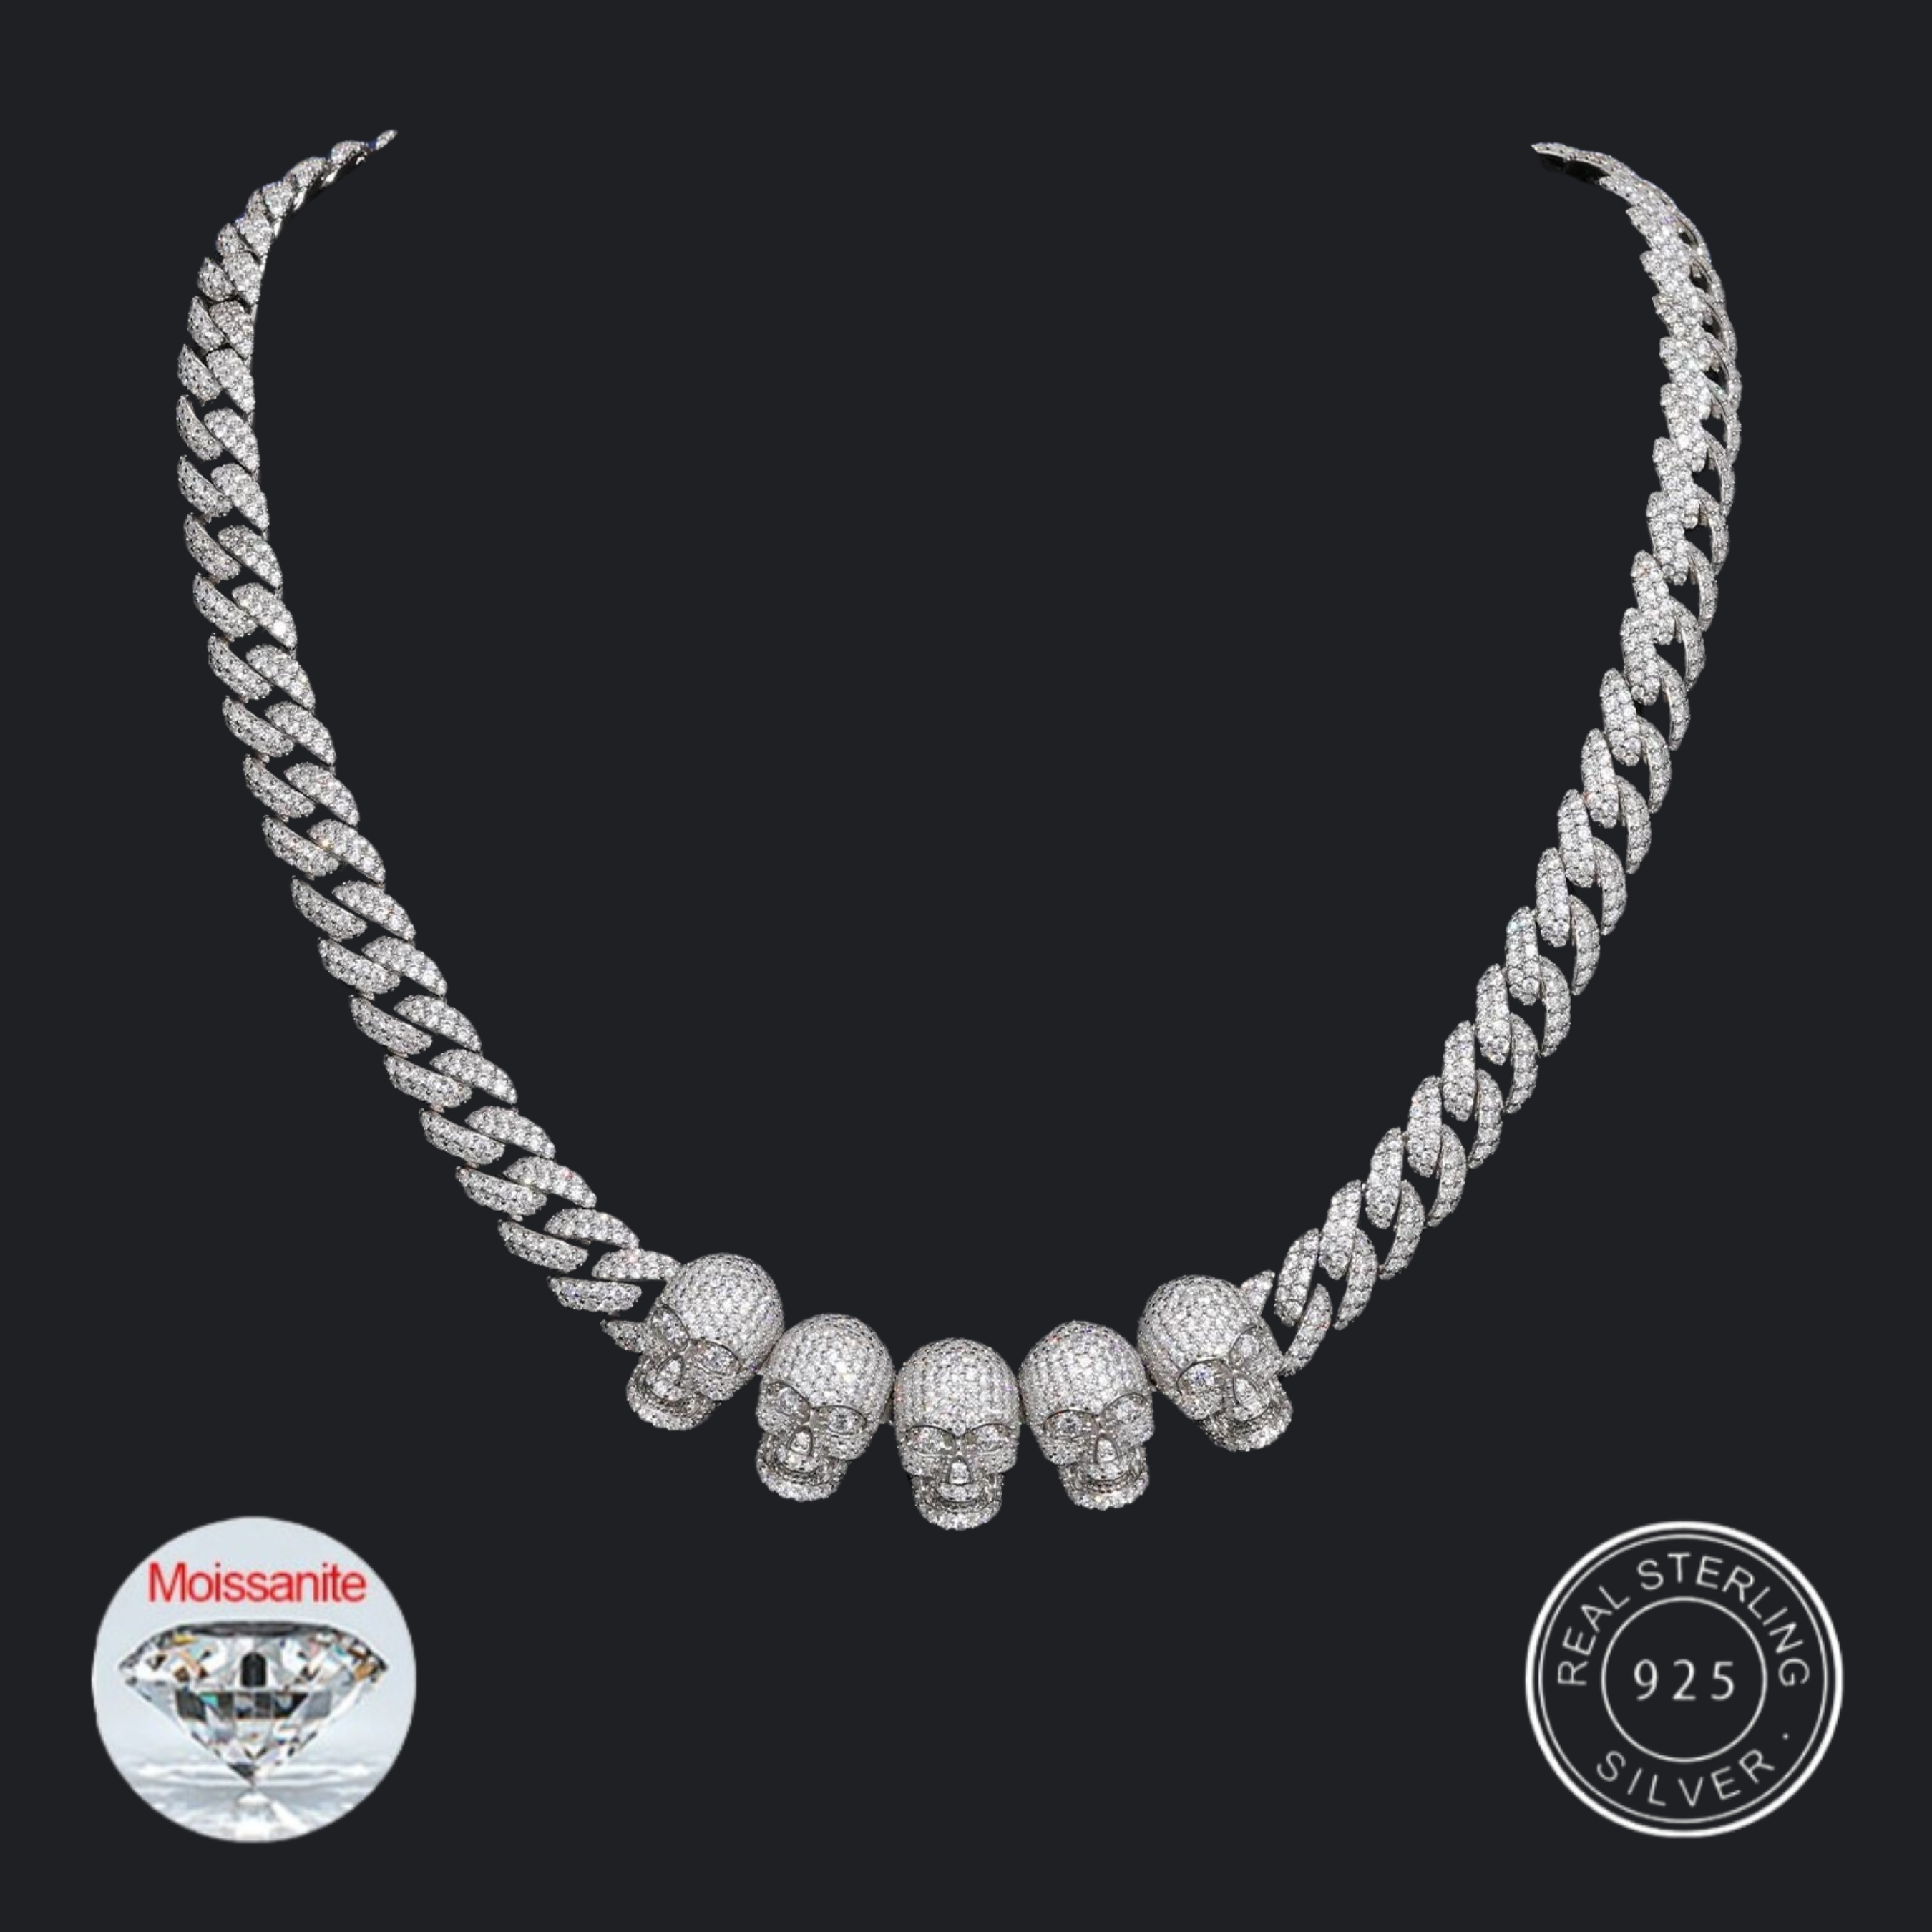 S925 VVS1 Moissanite Skull Link Necklace - 10mm